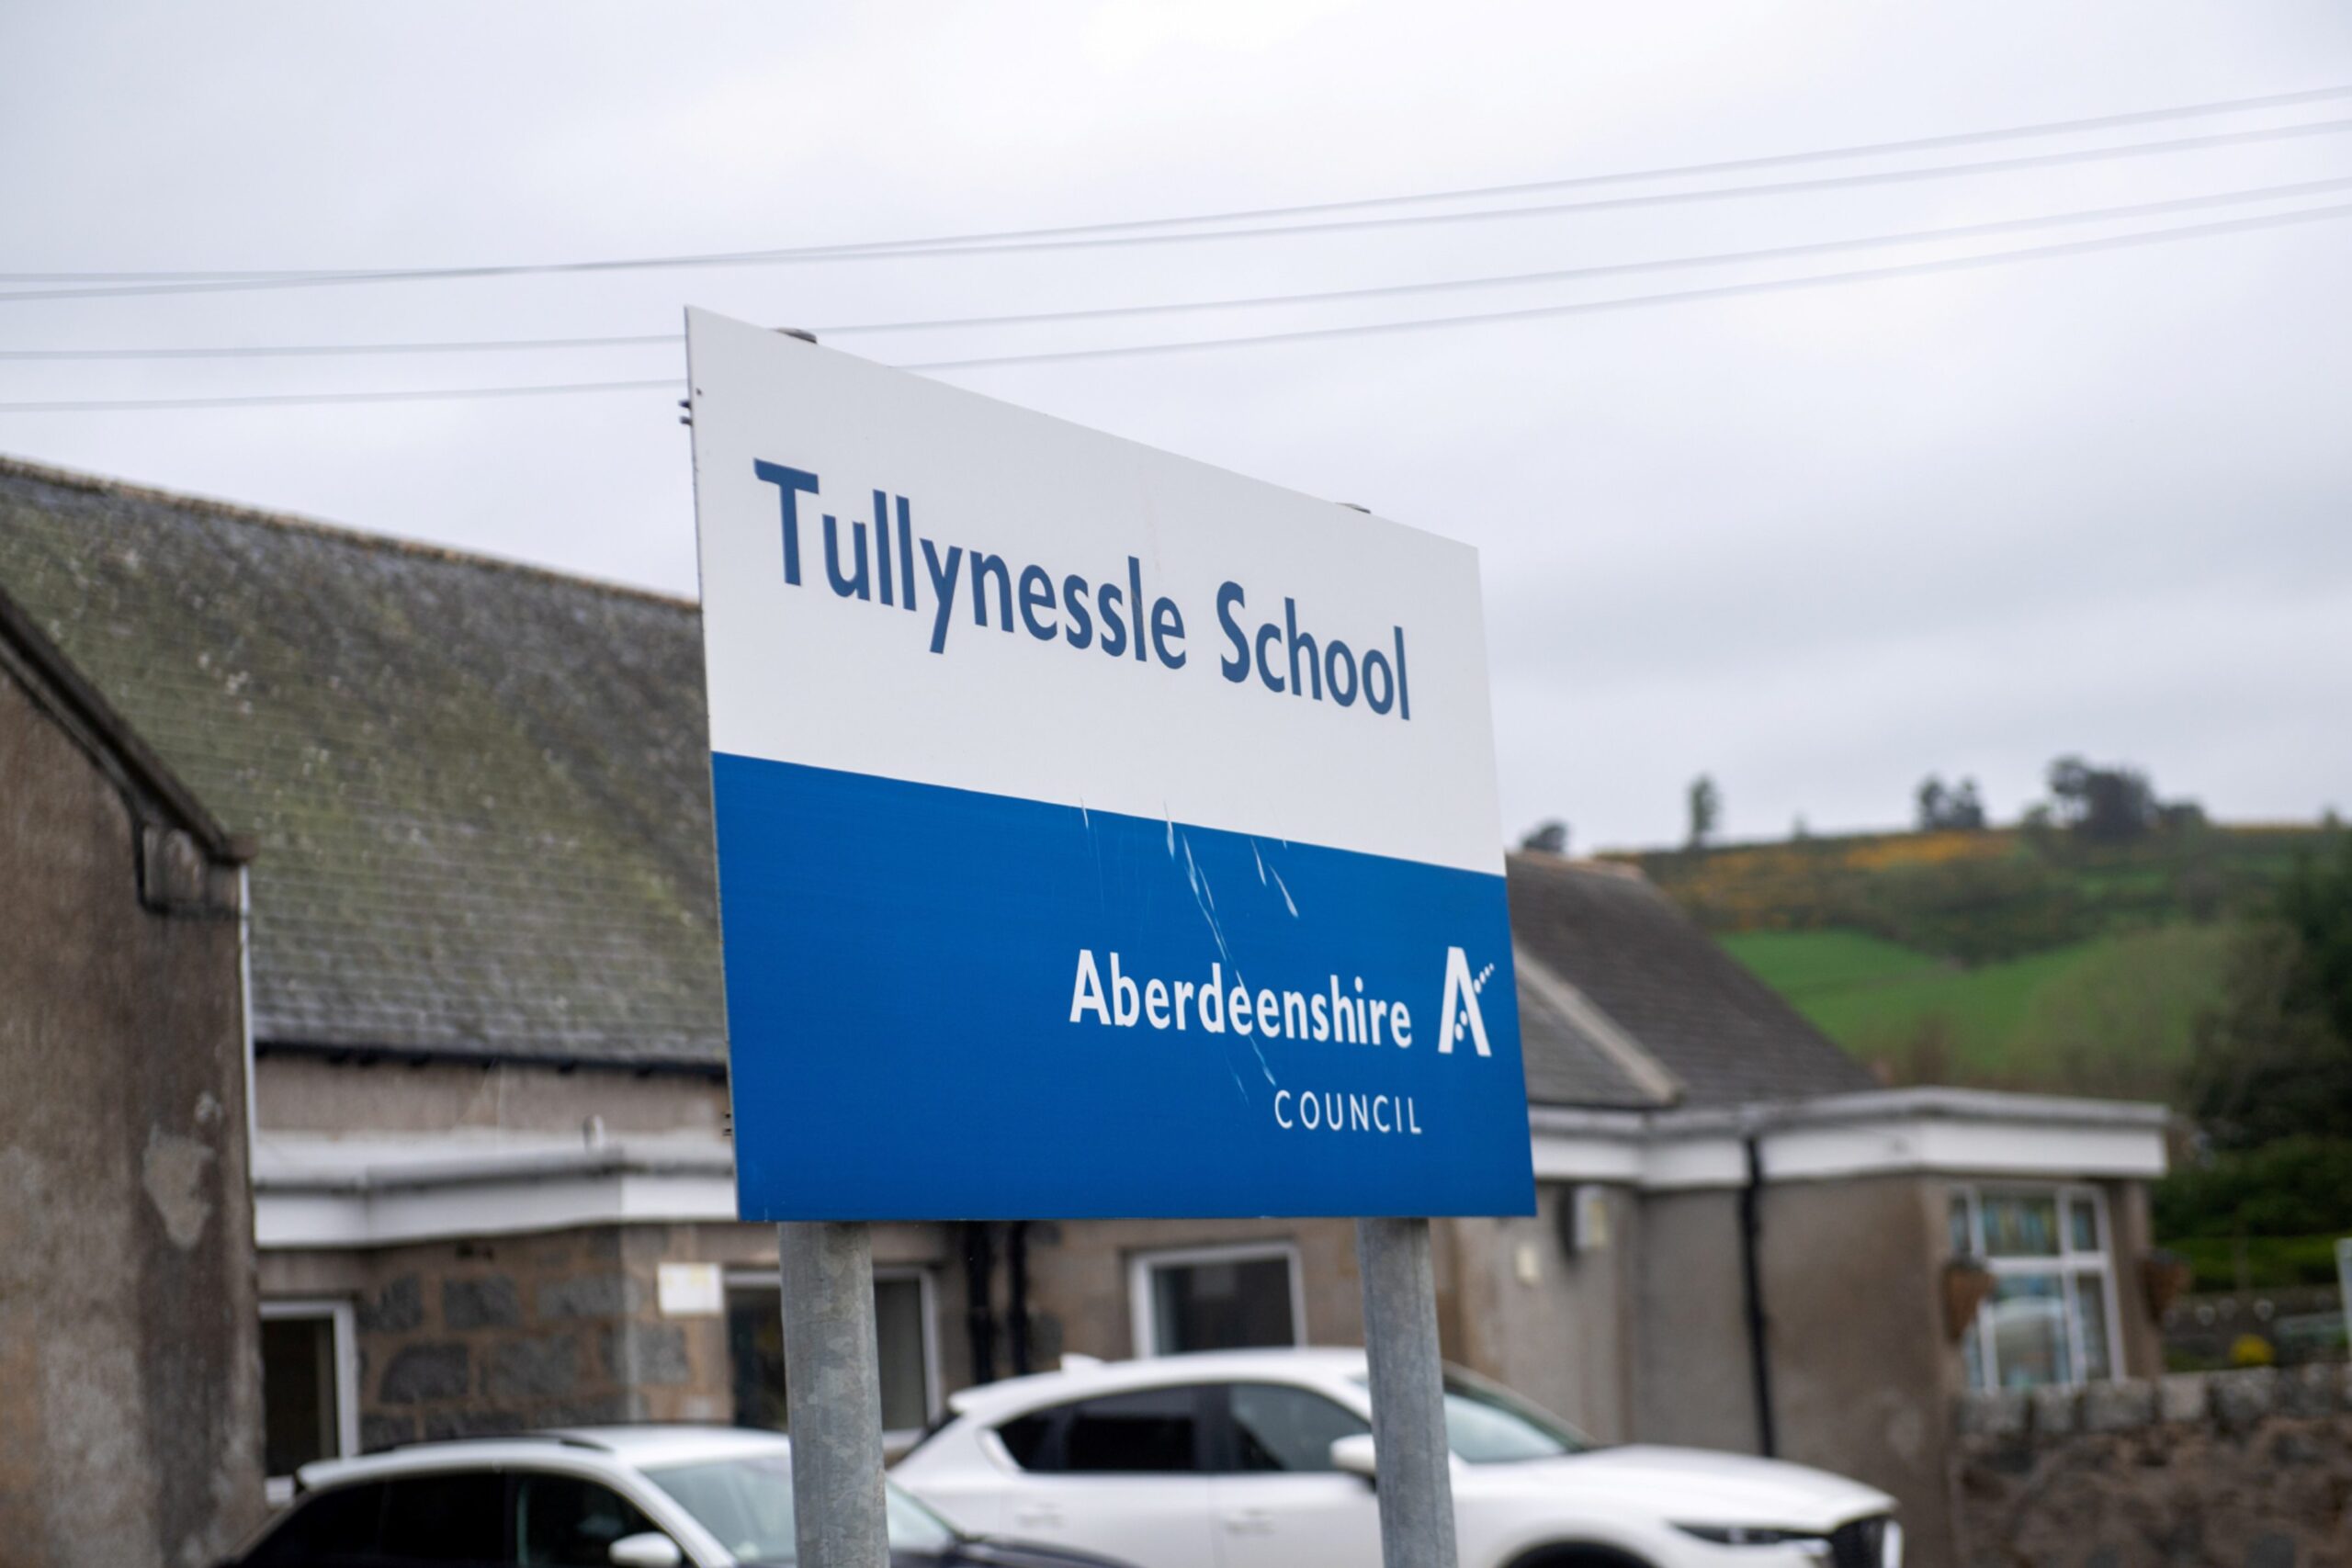 Tullynessle school sign